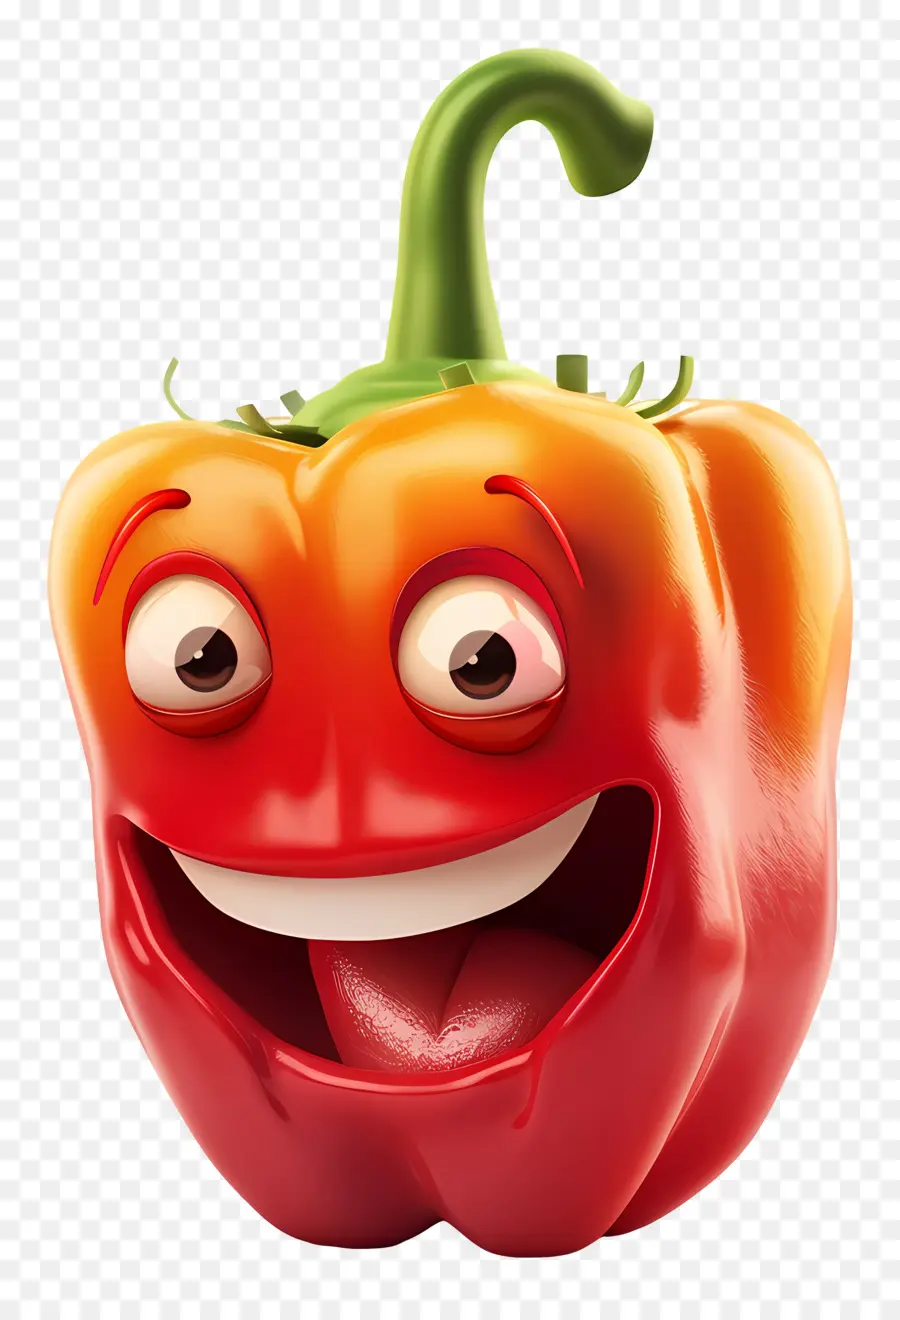 3d cartoon vegetable red bell pepper cartoon happy smiling